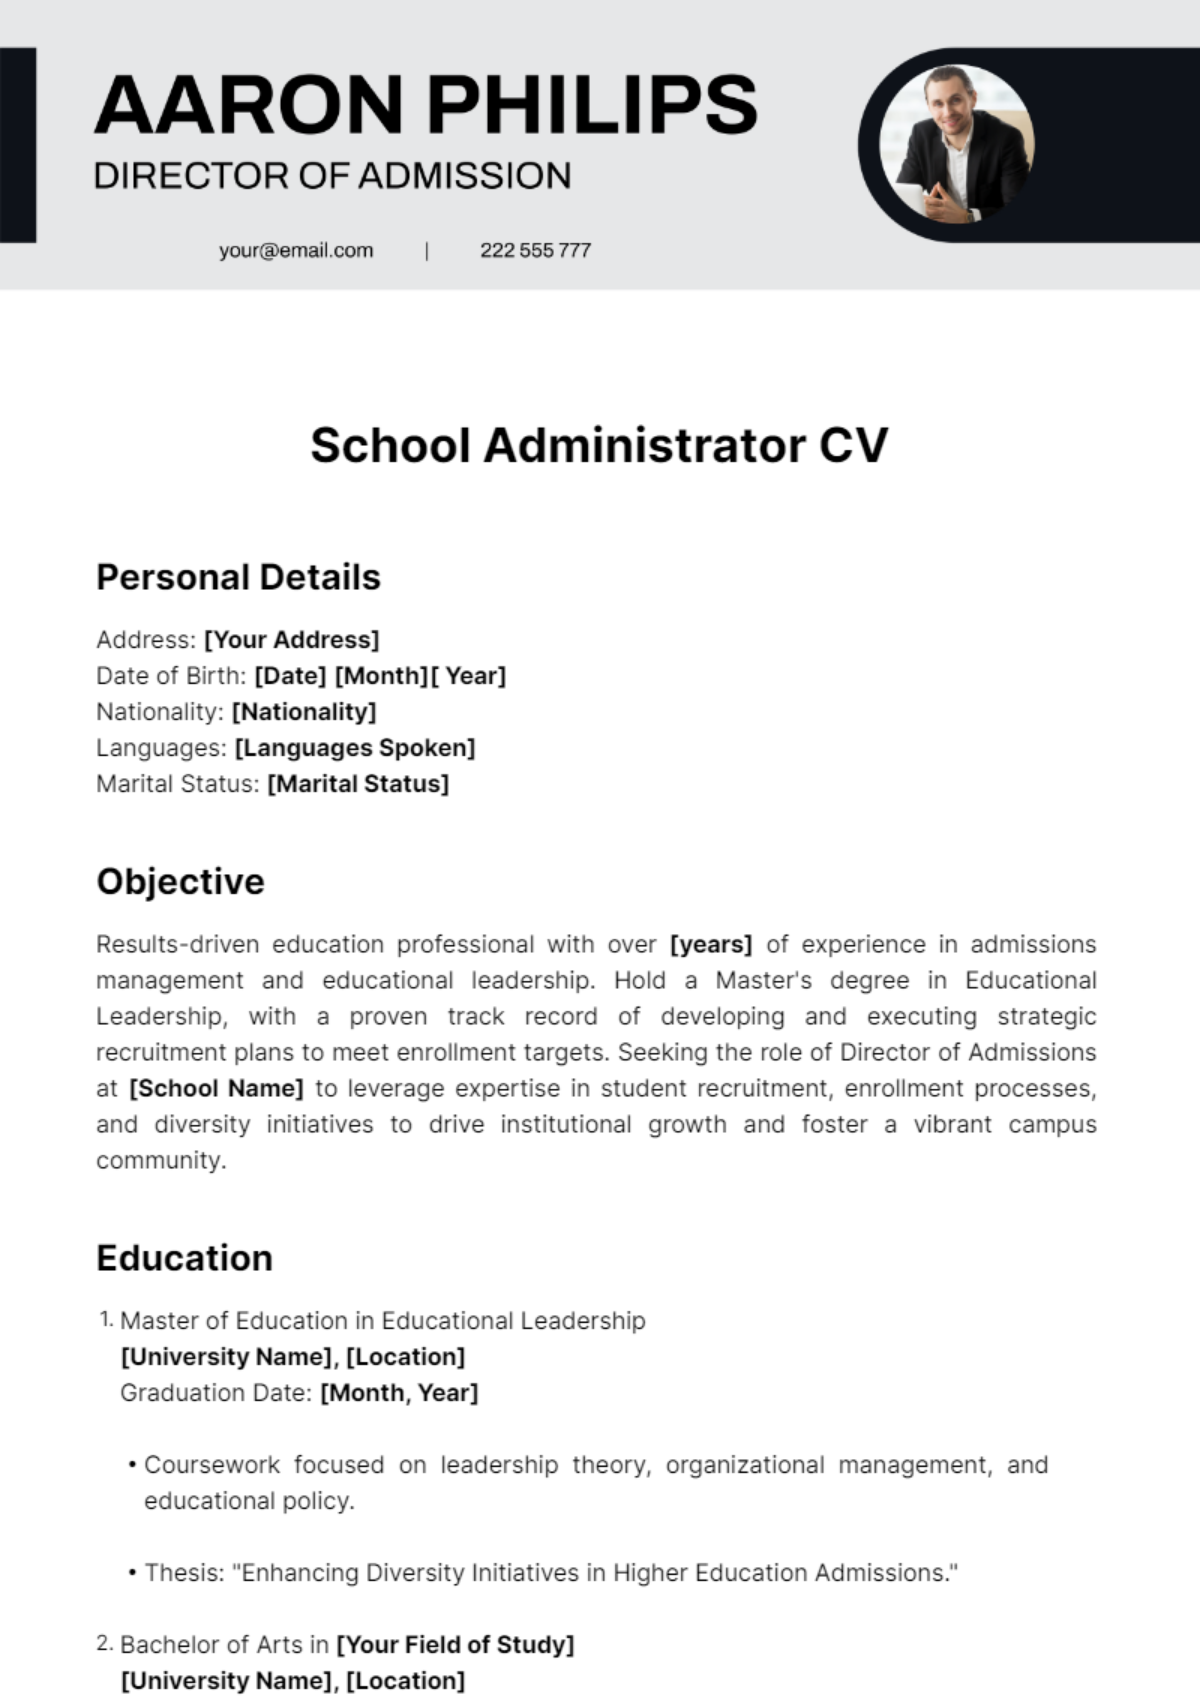 School Administrator CV Template